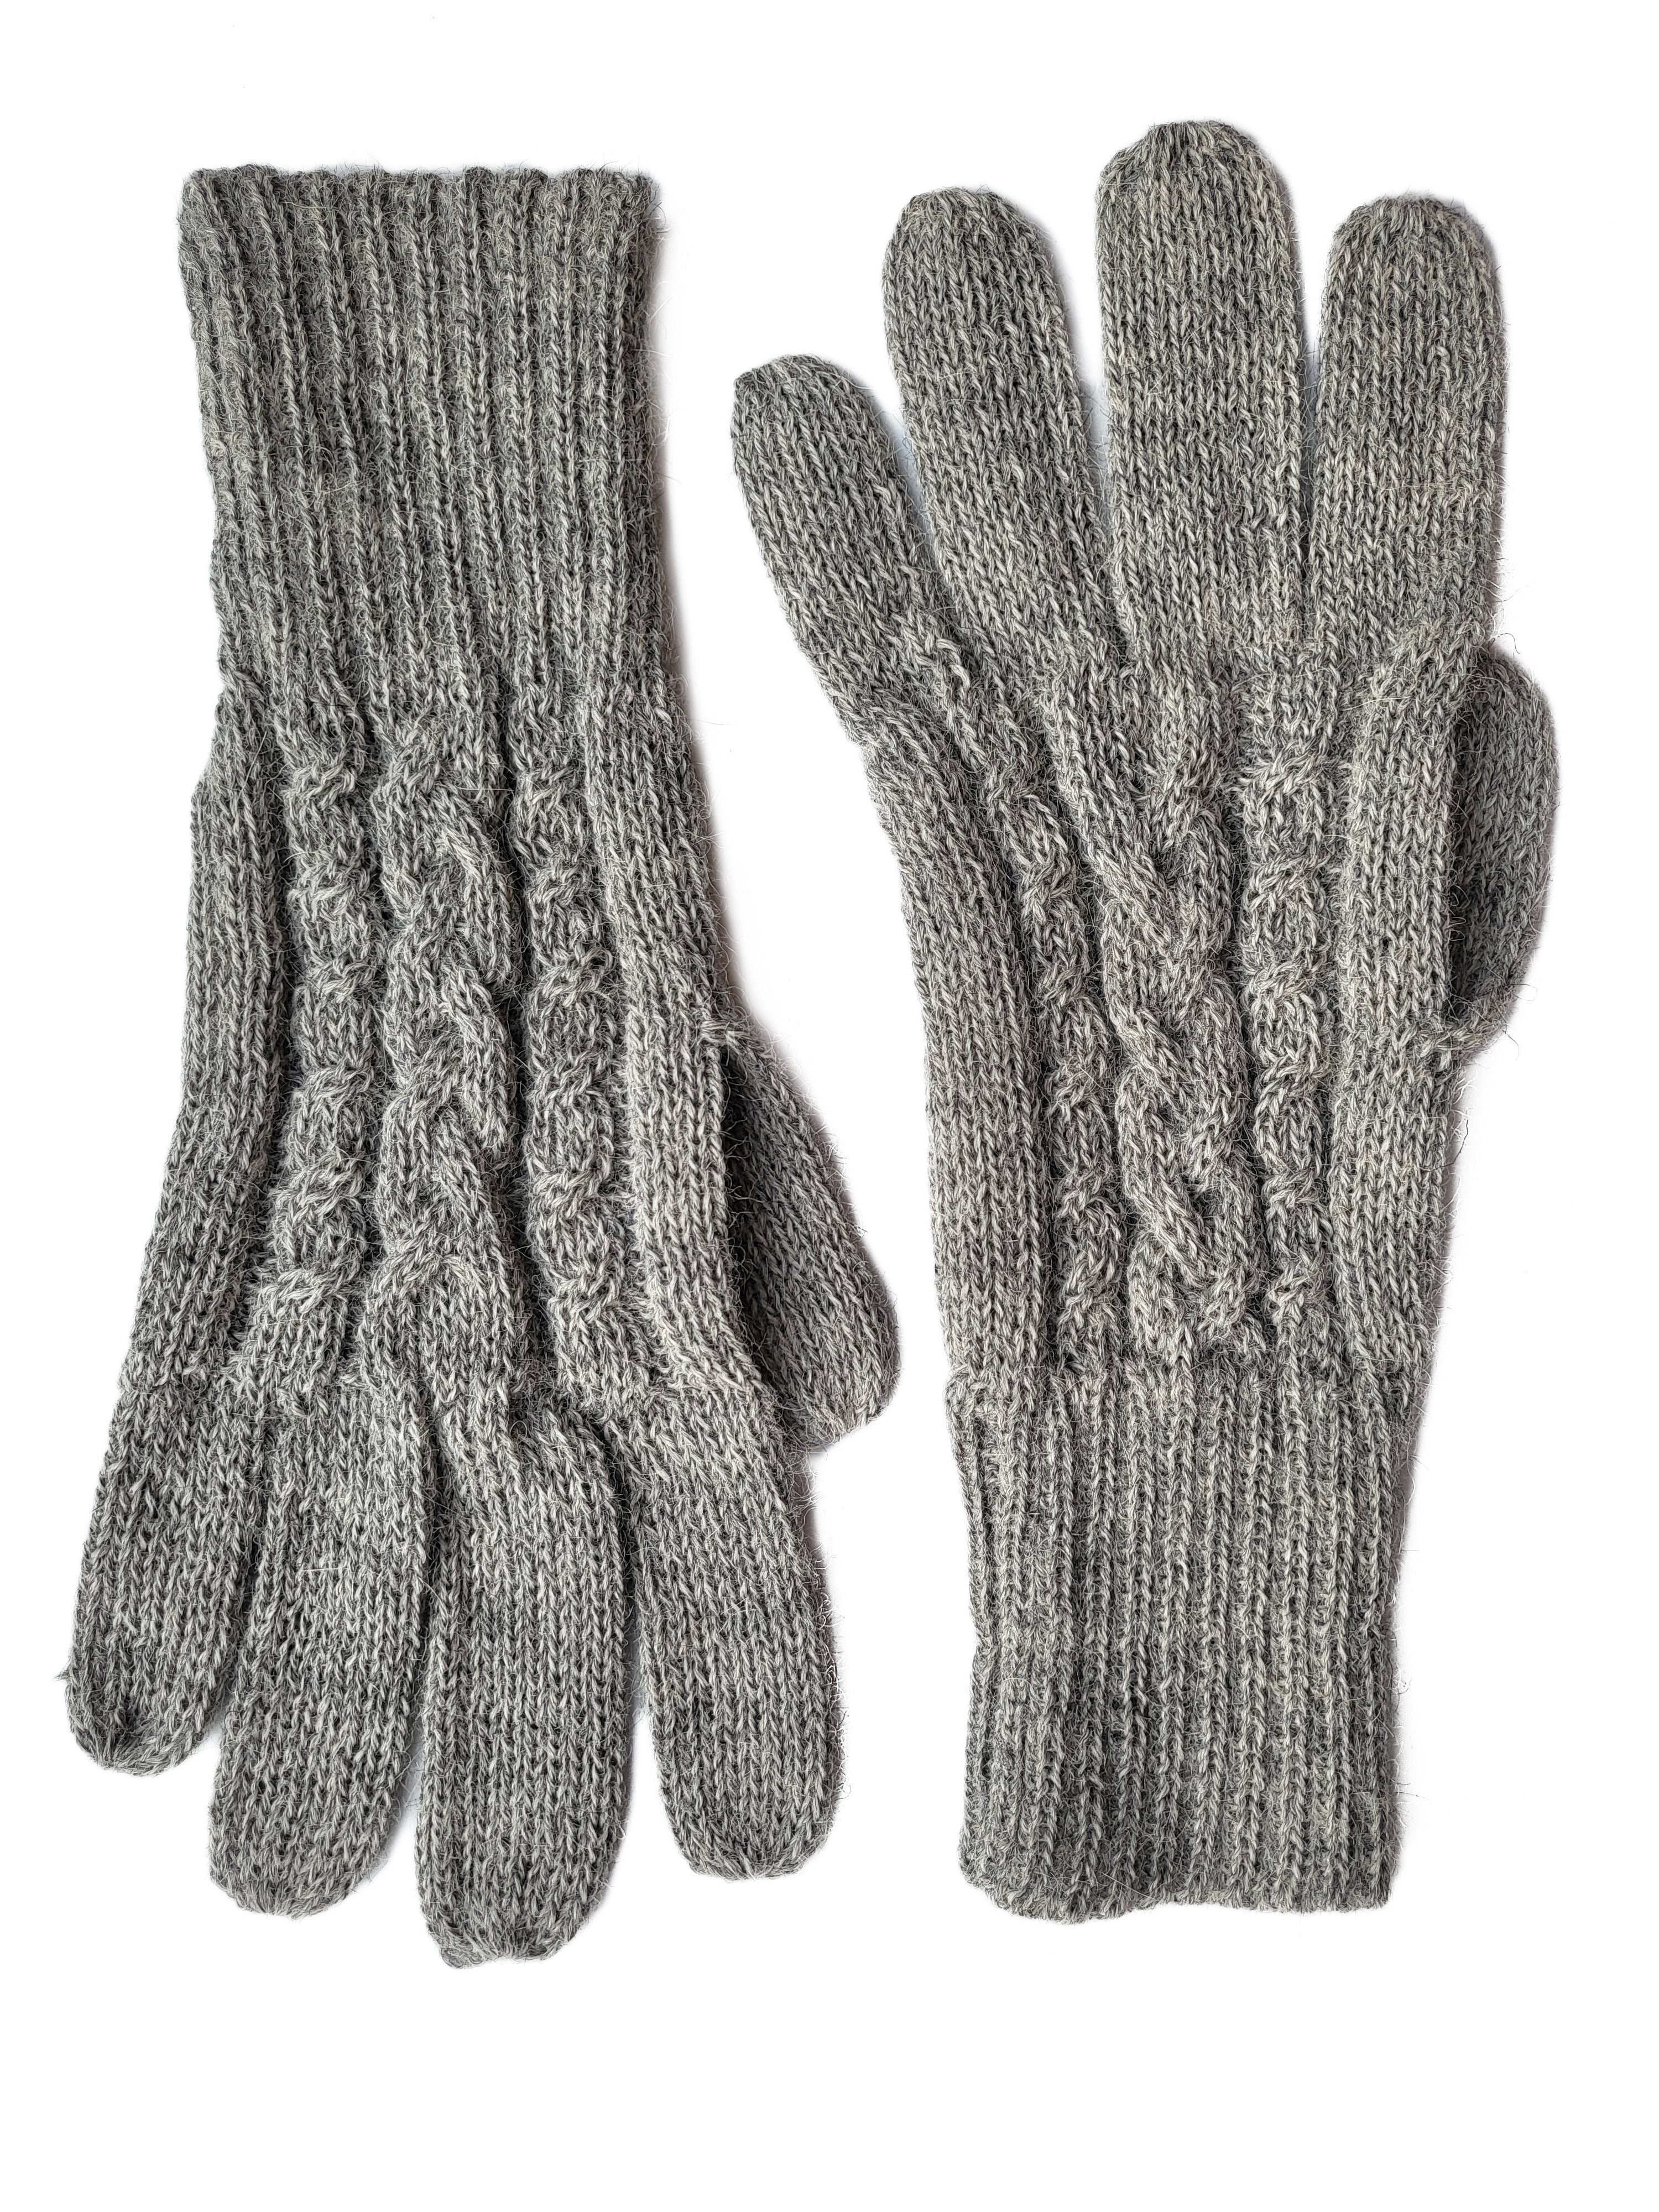 Guantibrada Gear hell grau Alpakawolle Alpaka Fingerhandschuhe 100% Posh Strickhandschuhe aus